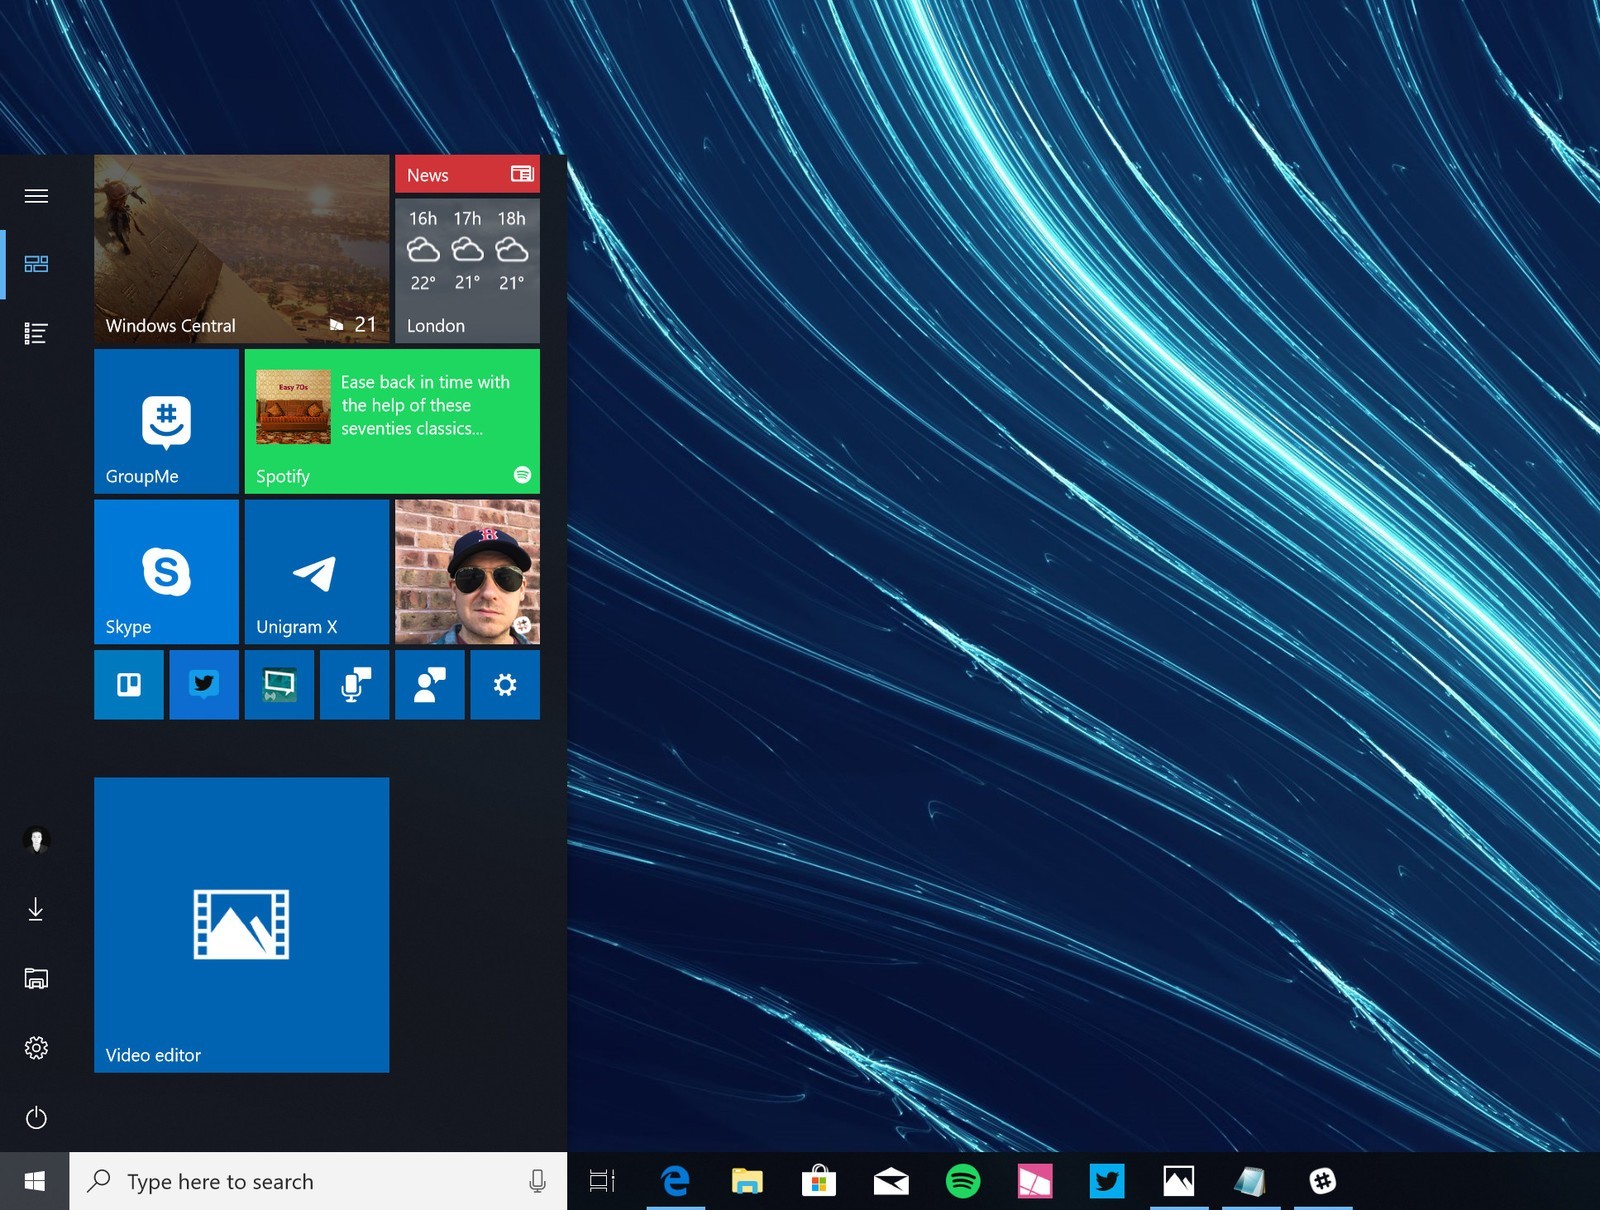  Microsoft  Releases  a Surprising Windows  10  Video  Editor  